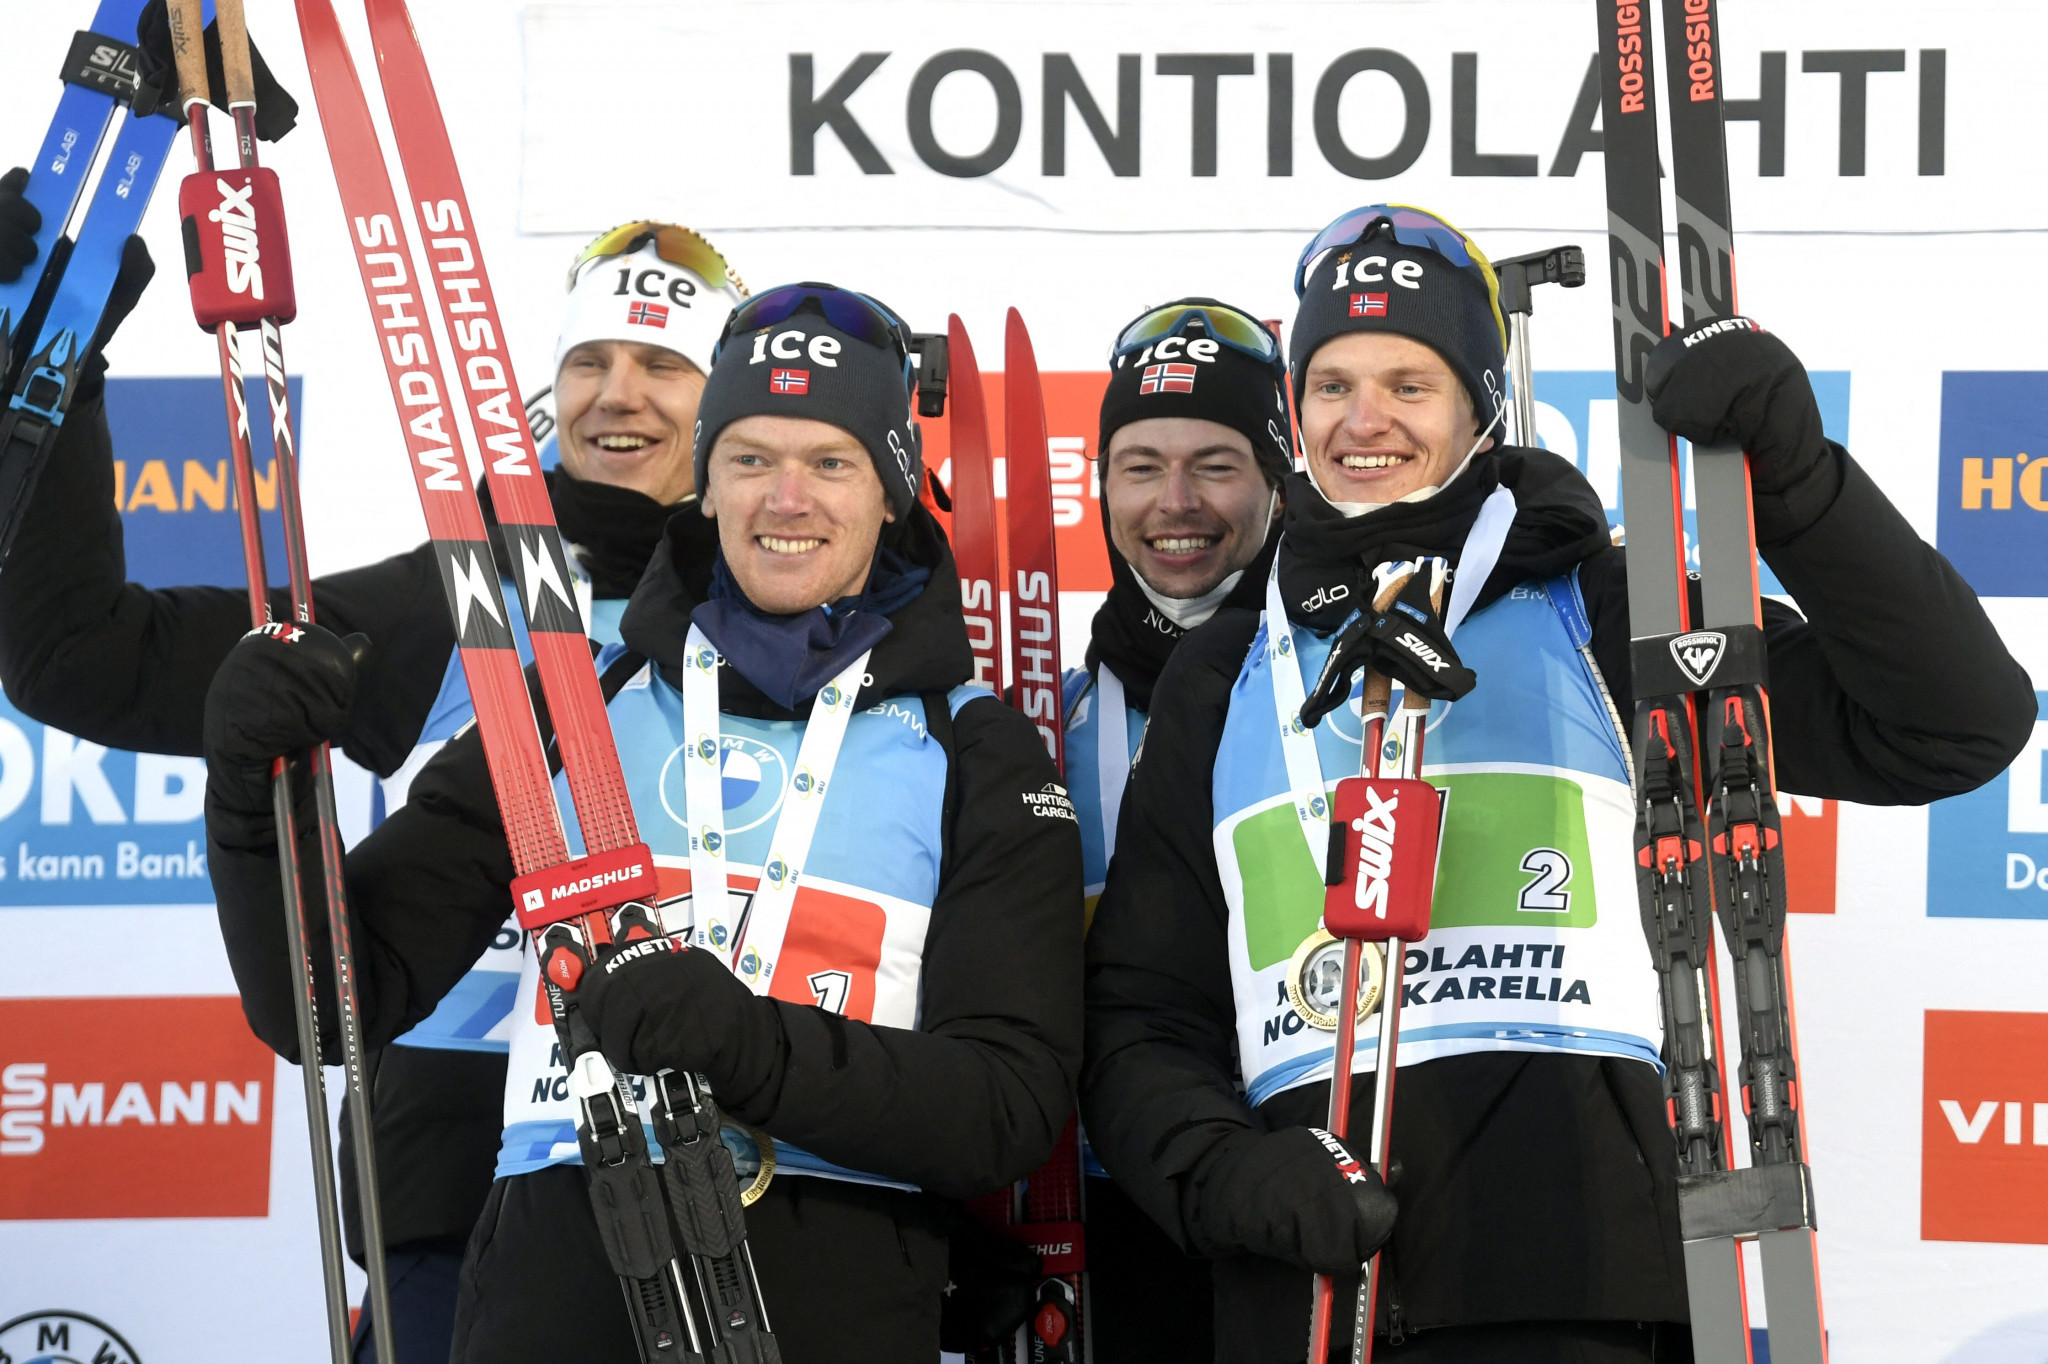 Norway claim second successive relay race at Kontiolahti Biathlon World Cup